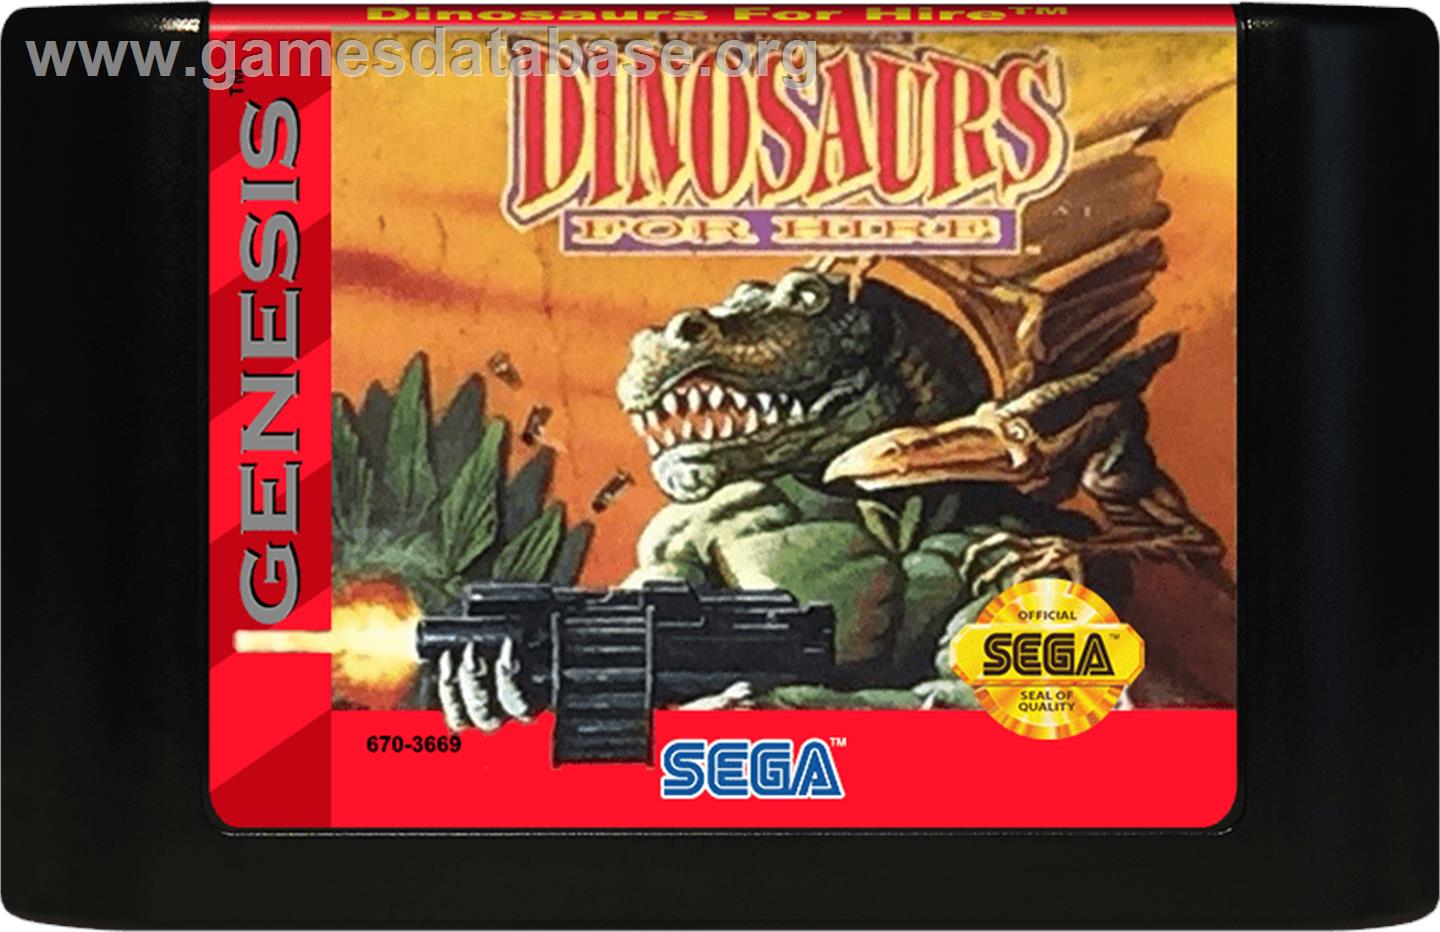 Tom Mason's Dinosaurs for Hire - Sega Genesis - Artwork - Cartridge